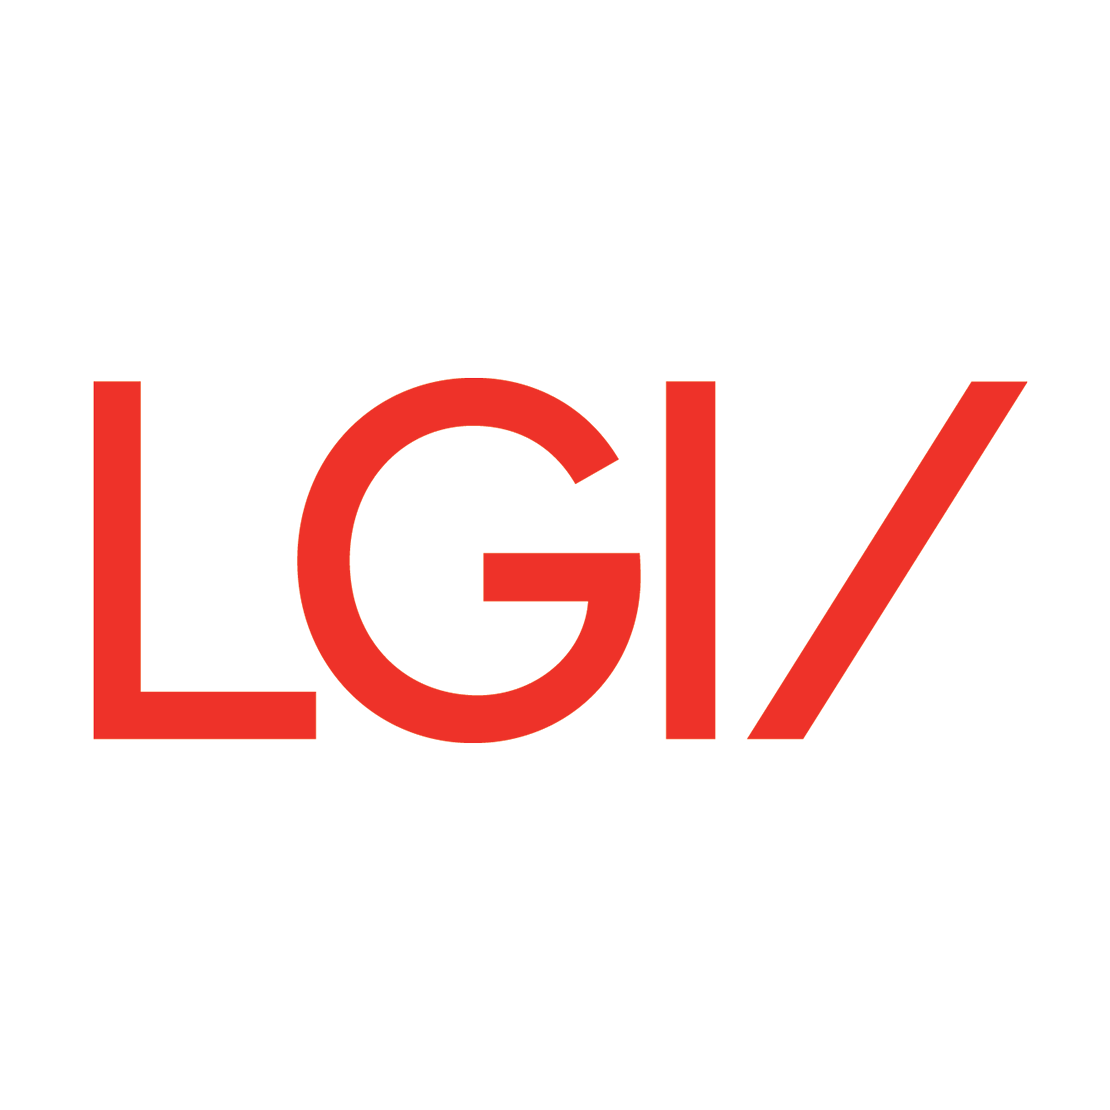 Lucy Guerin Inc logo